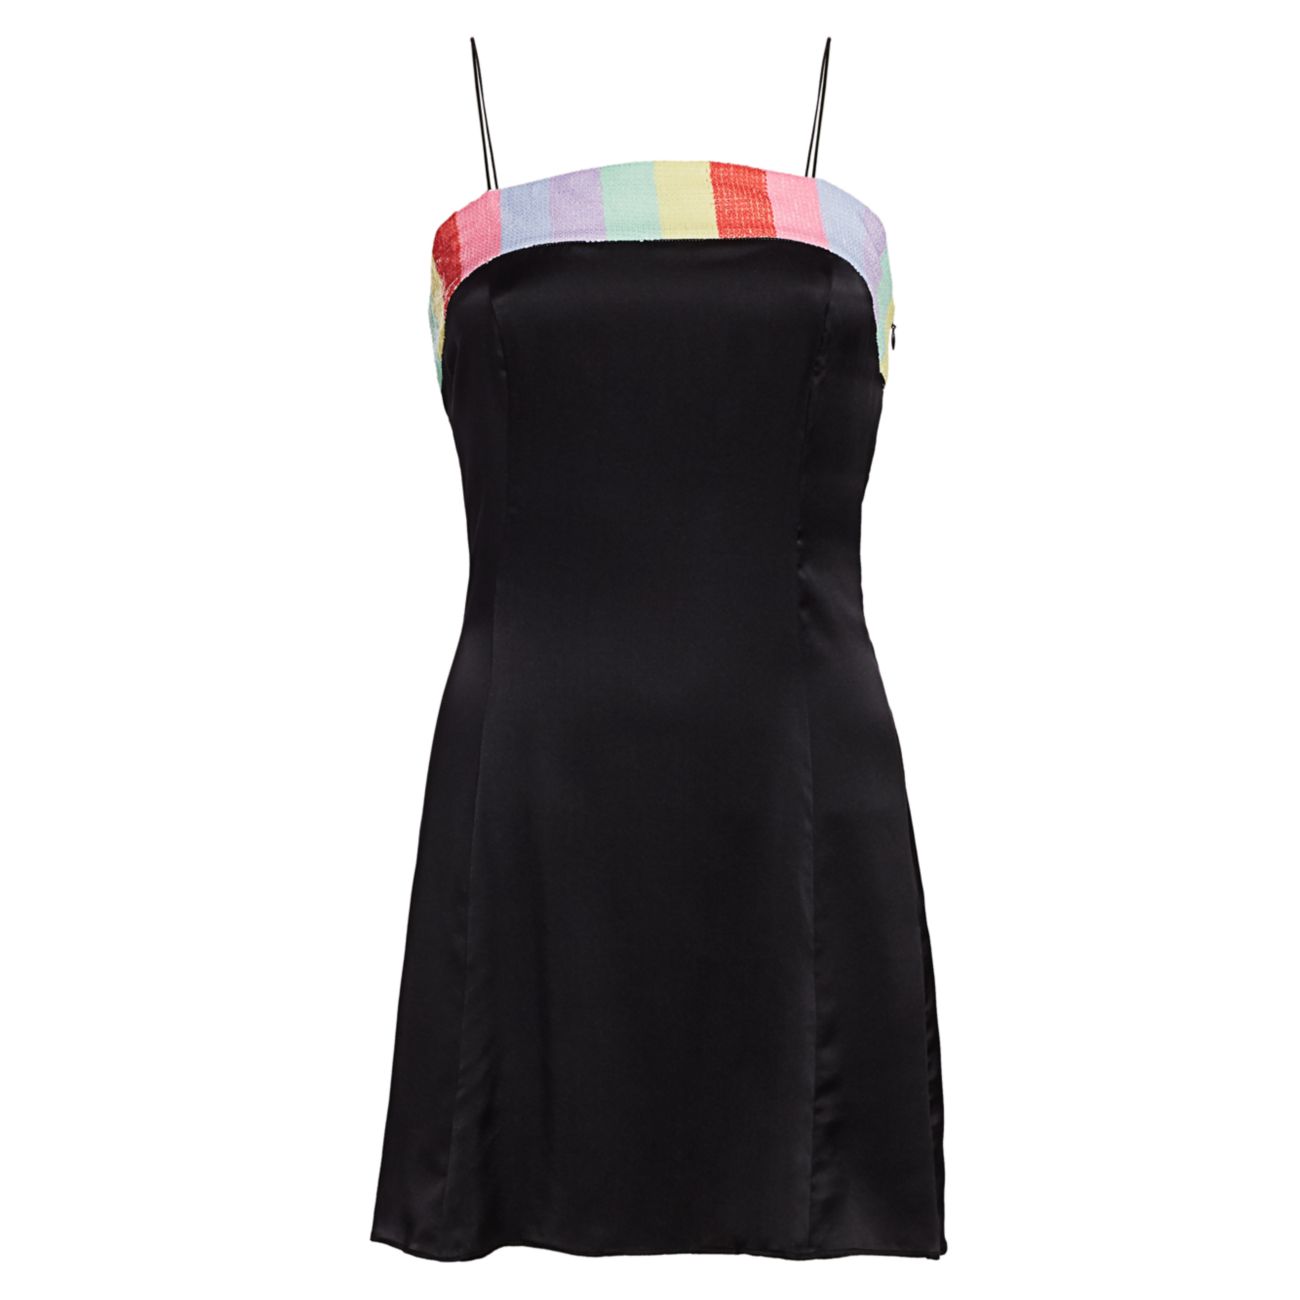 Шелковое мини-платье-комбинация Lettie Rainbow с пайетками и бантом Olivia Rubin